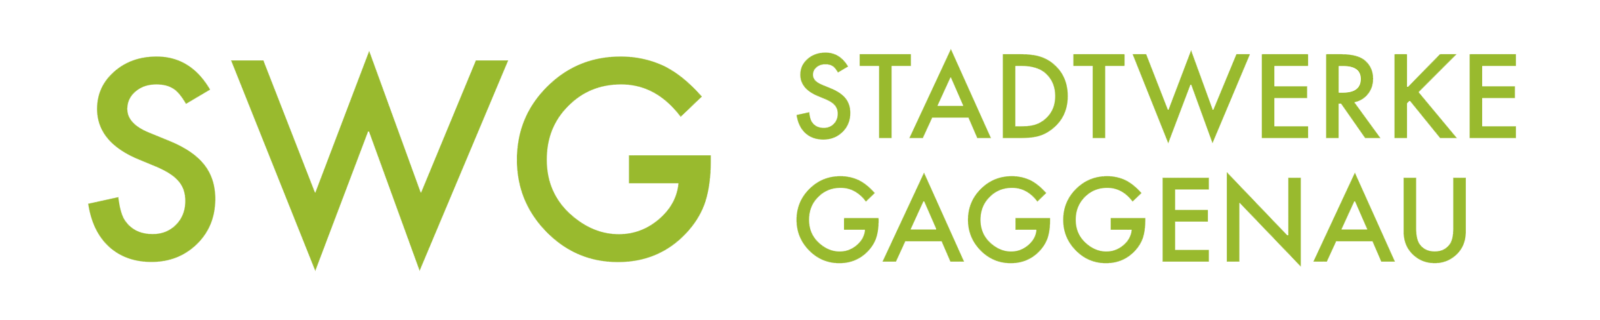 SWG Logo